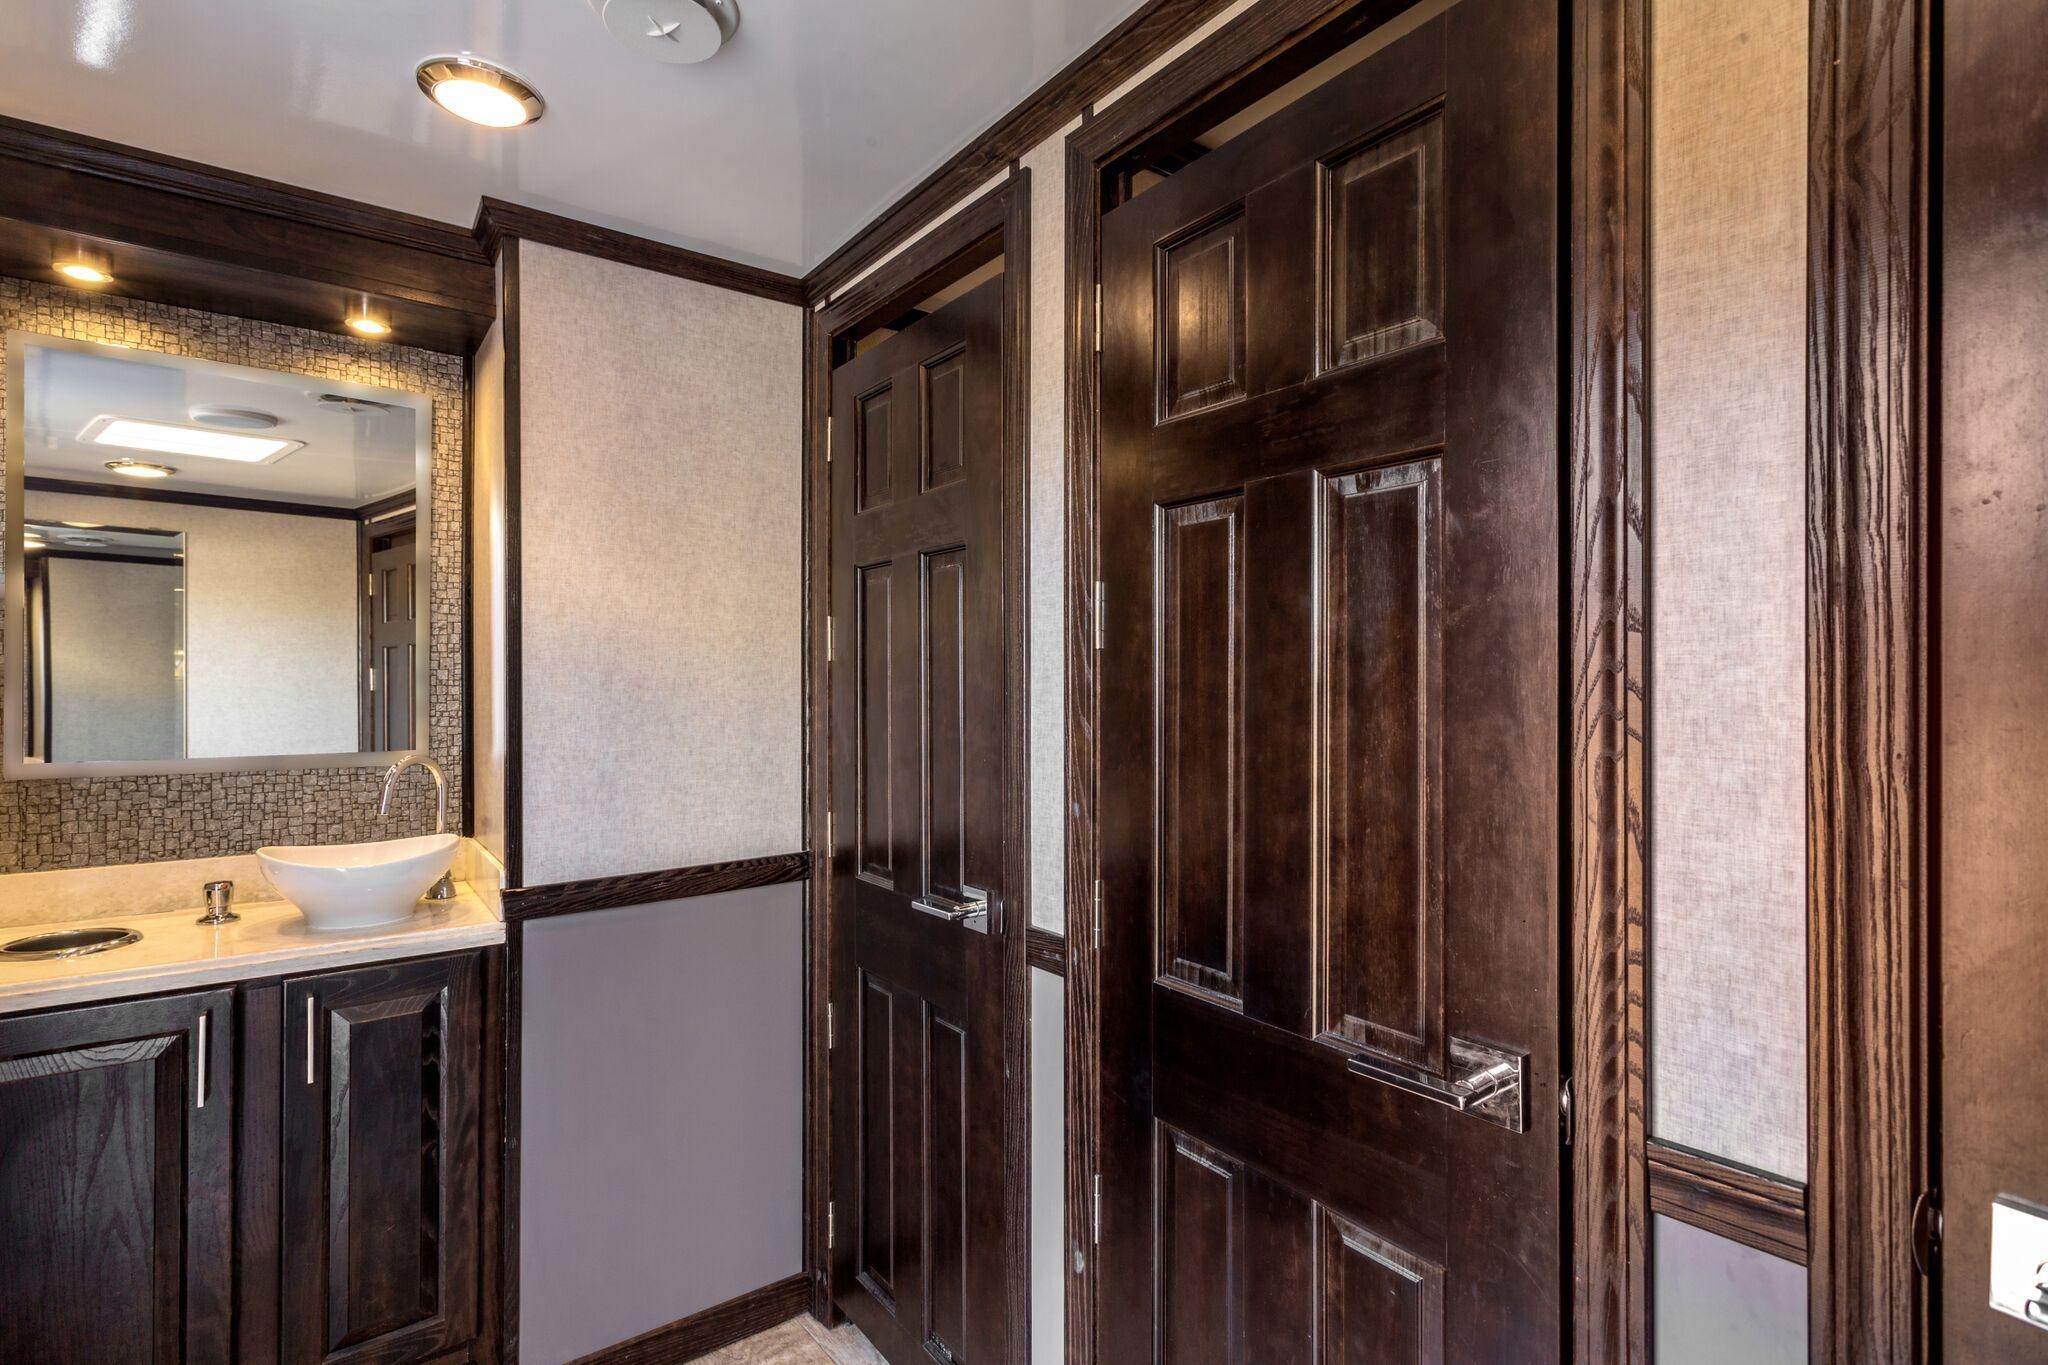 interior of bathroom trailer with sleek wood design